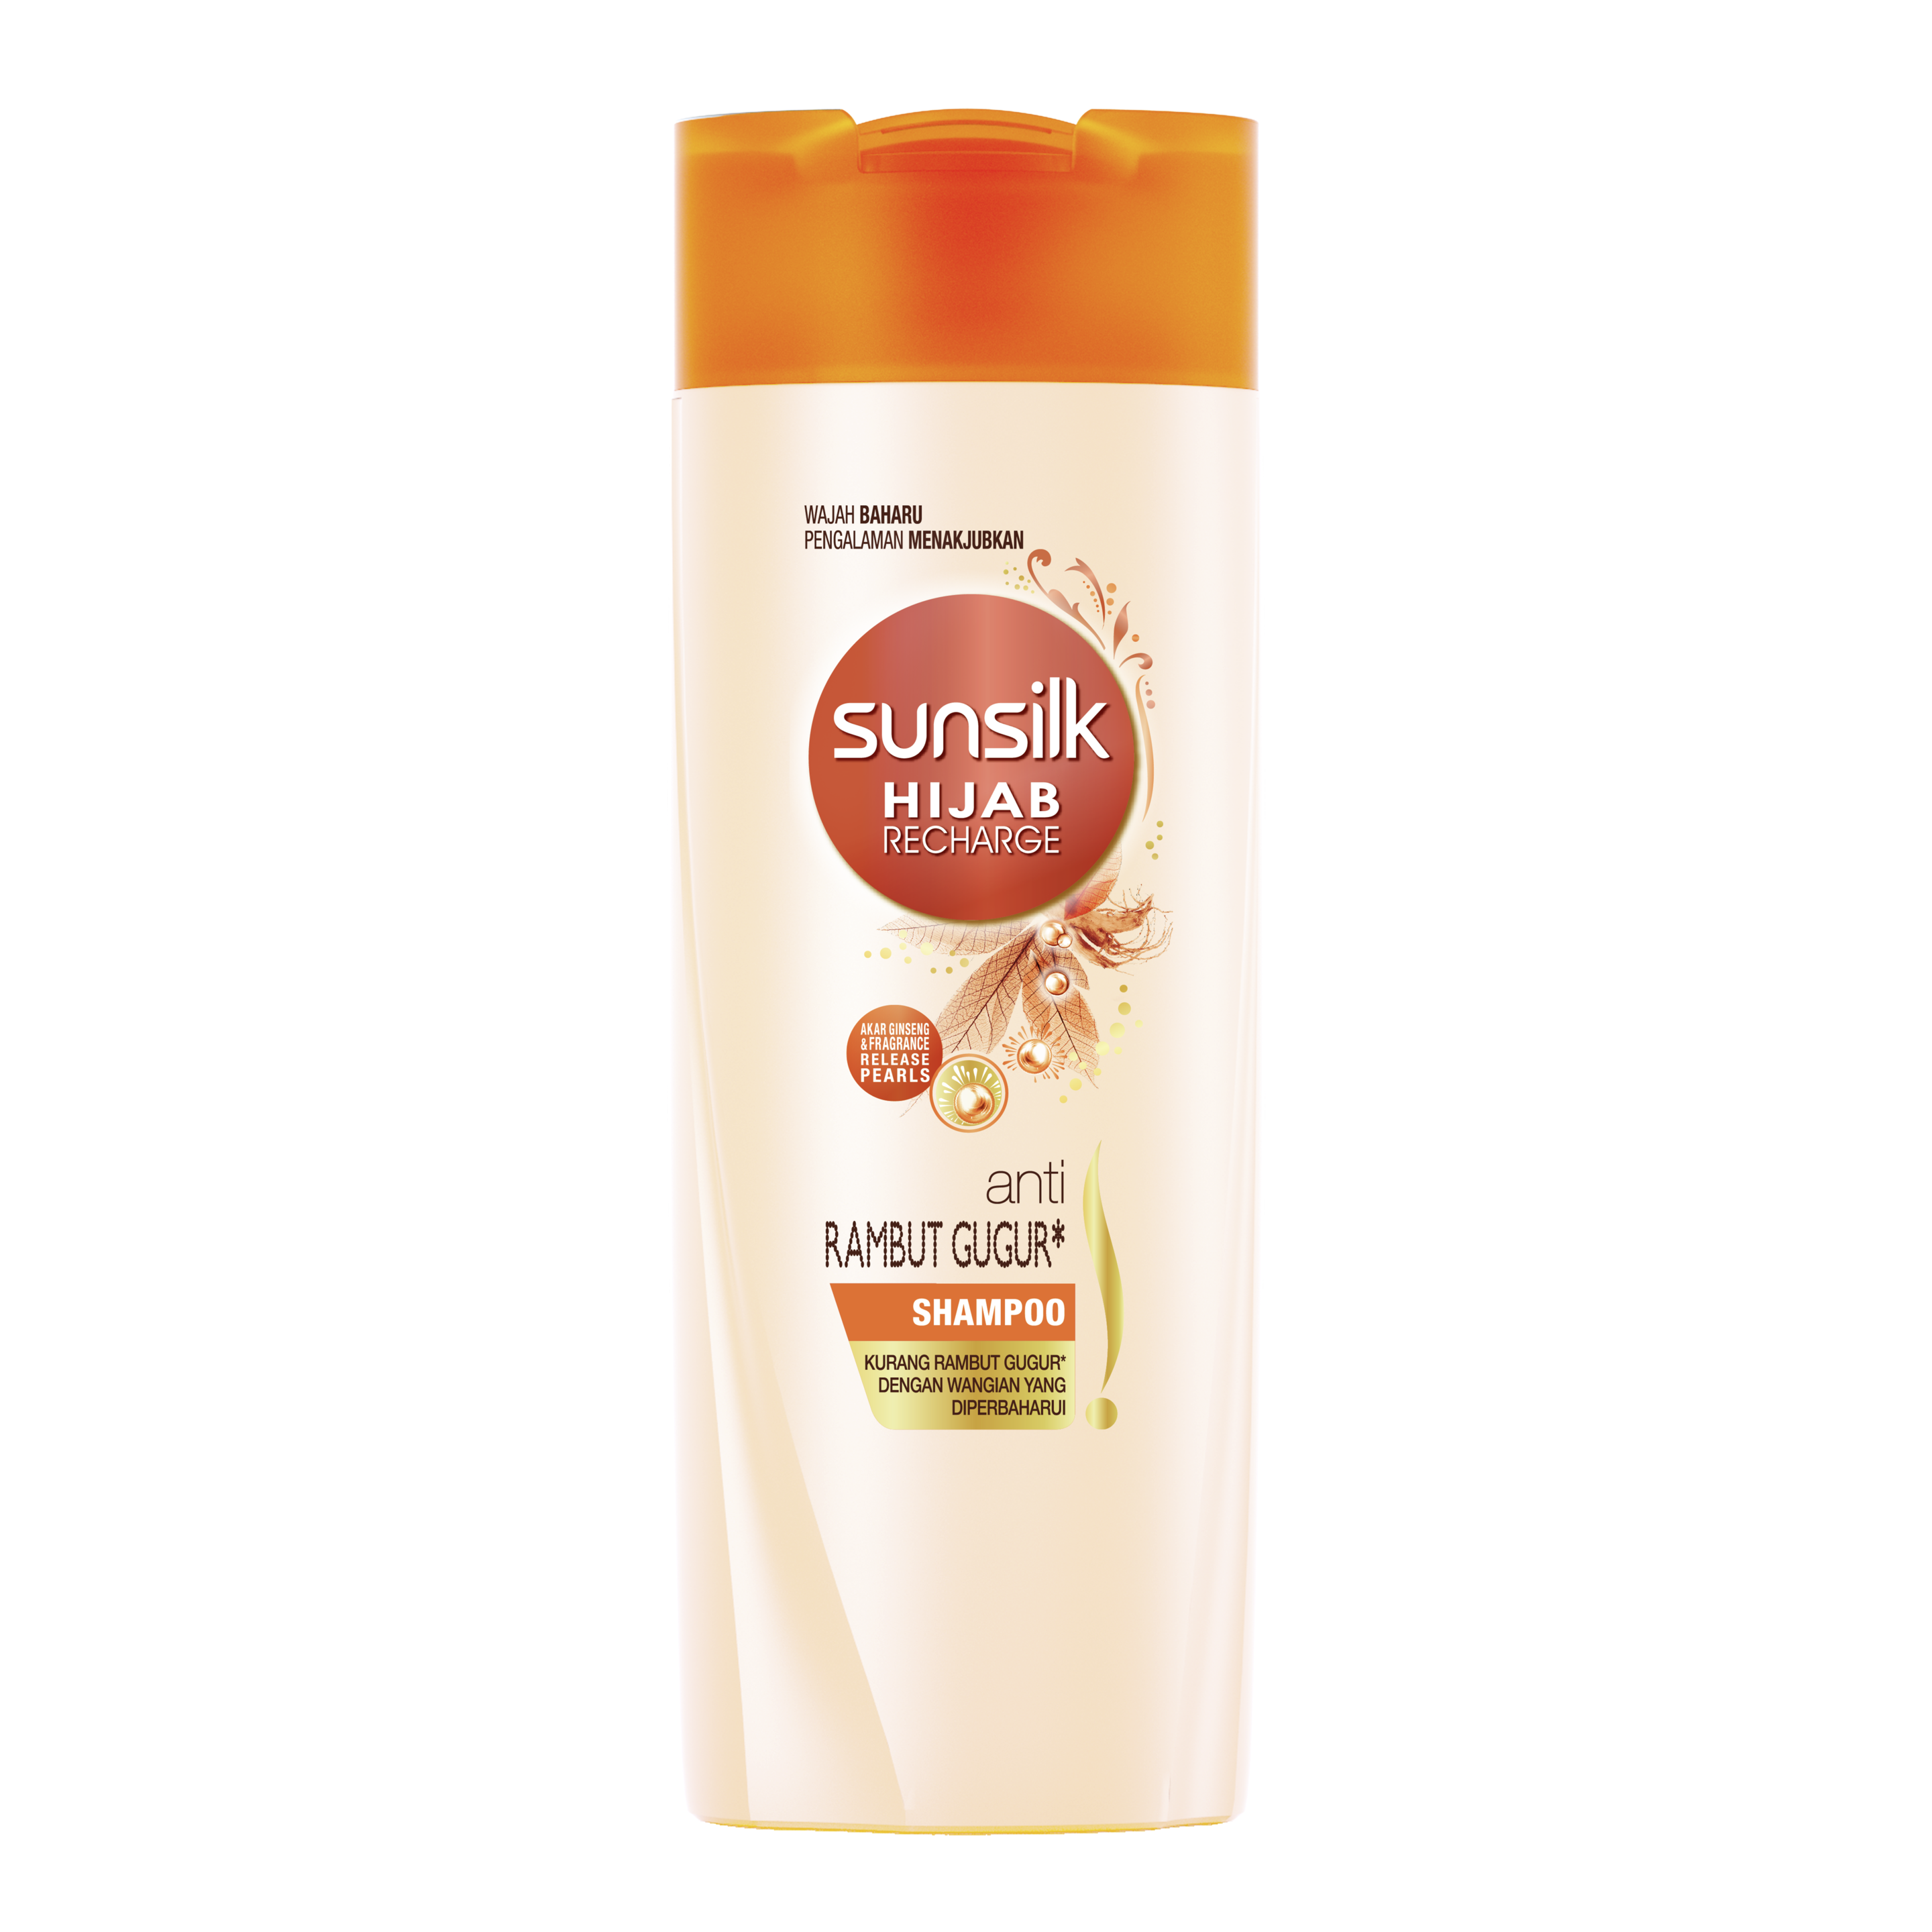 Sunsilk Hijab Recharge Anti Rambut Gugur Shampoo 70ml front of pack image